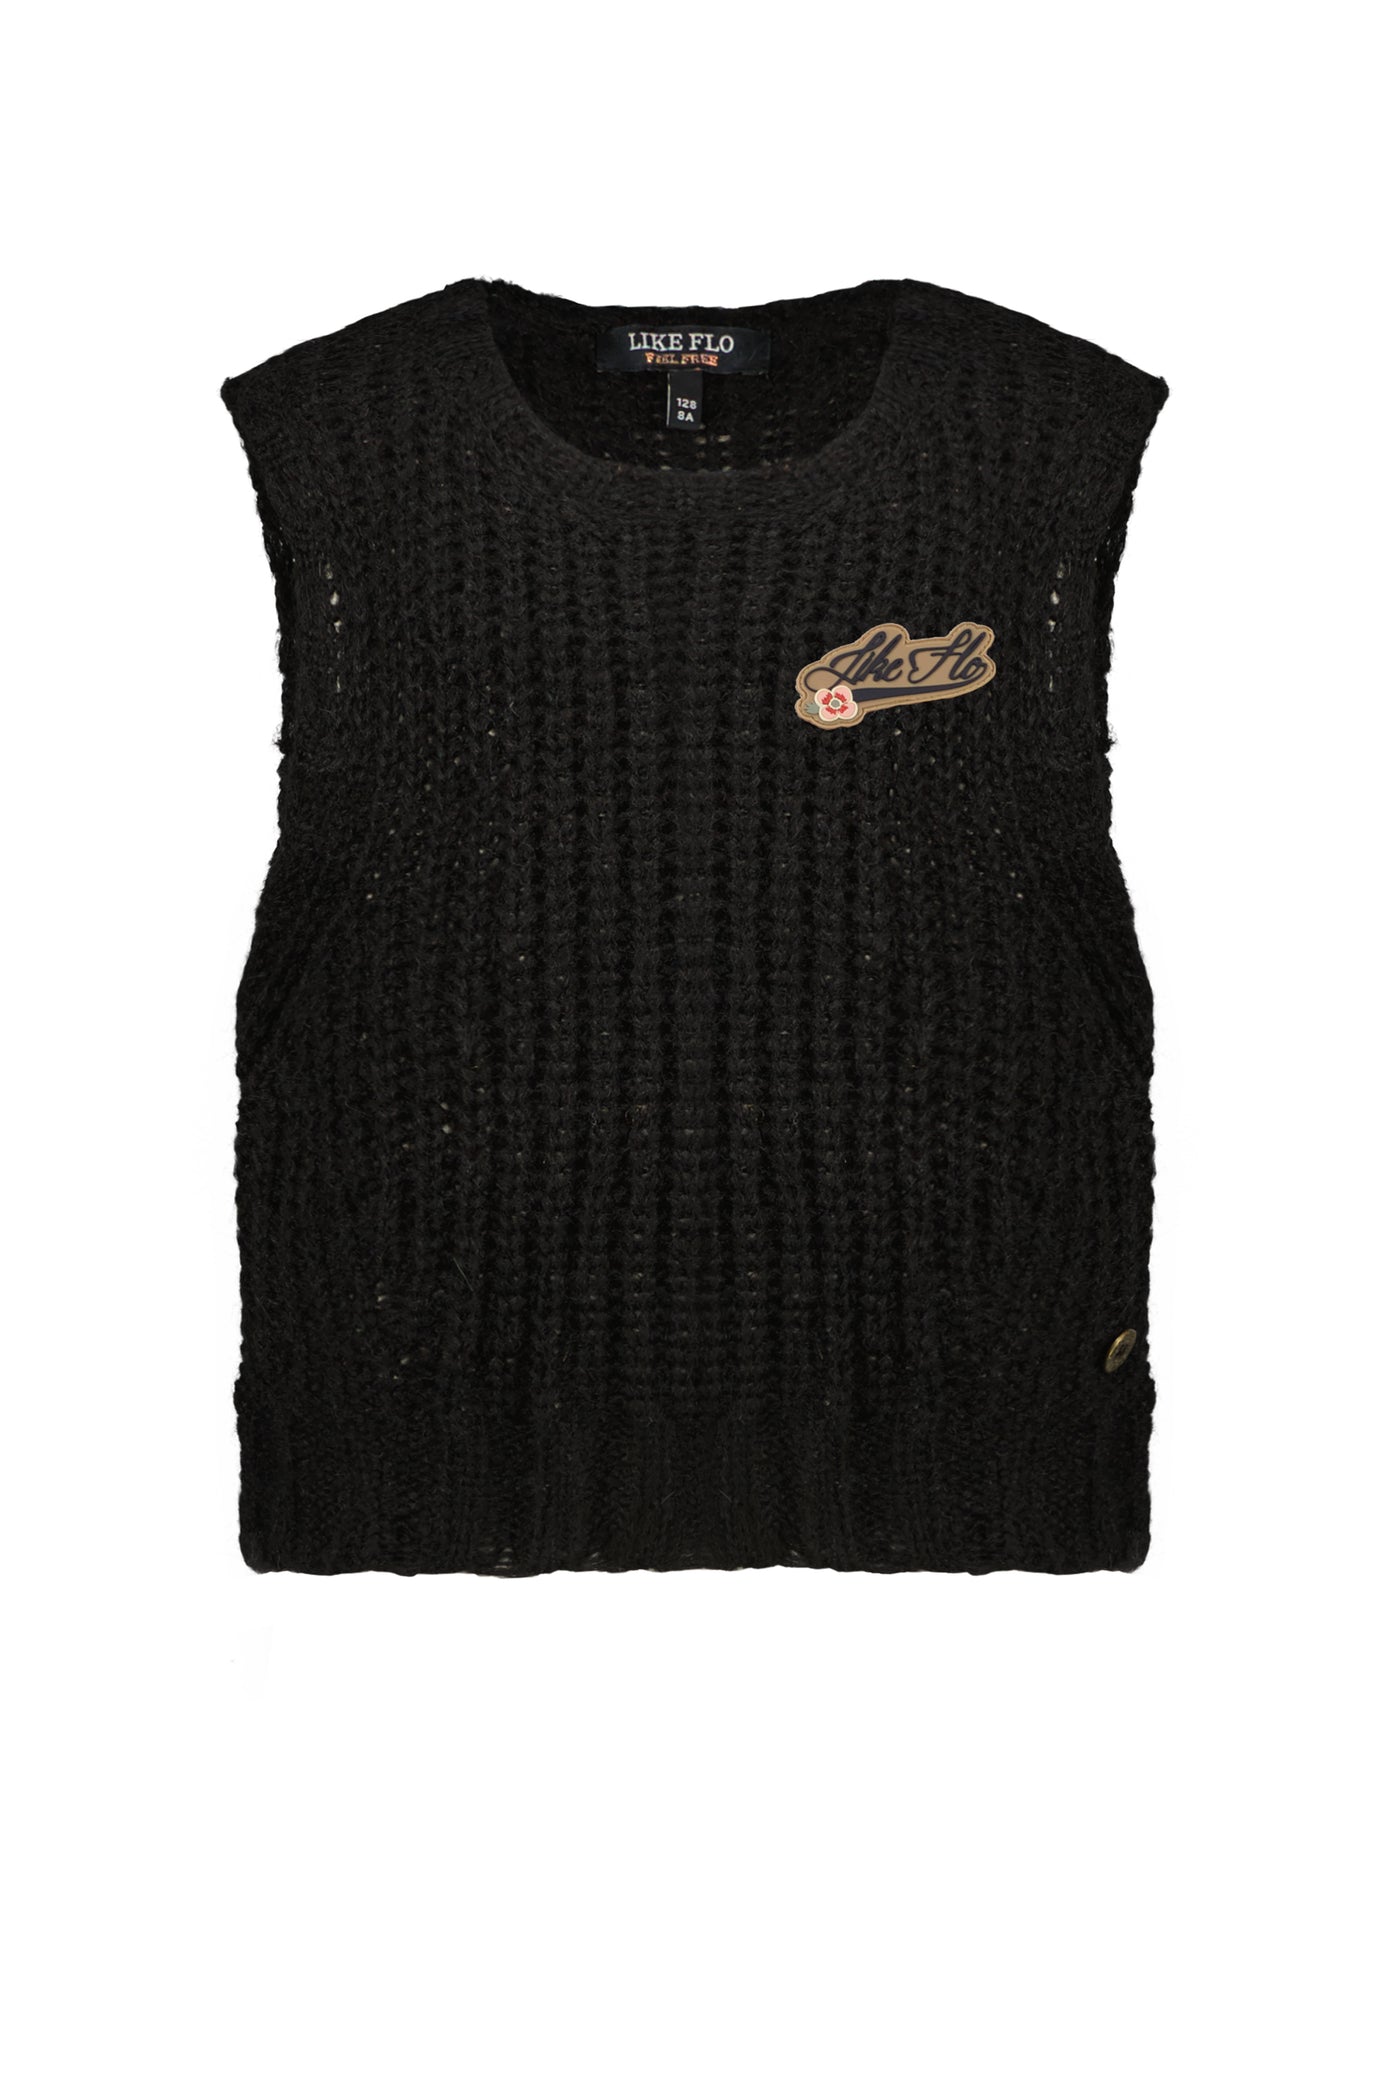 Flo girls knit cardigan spencer Black F209-5302 099